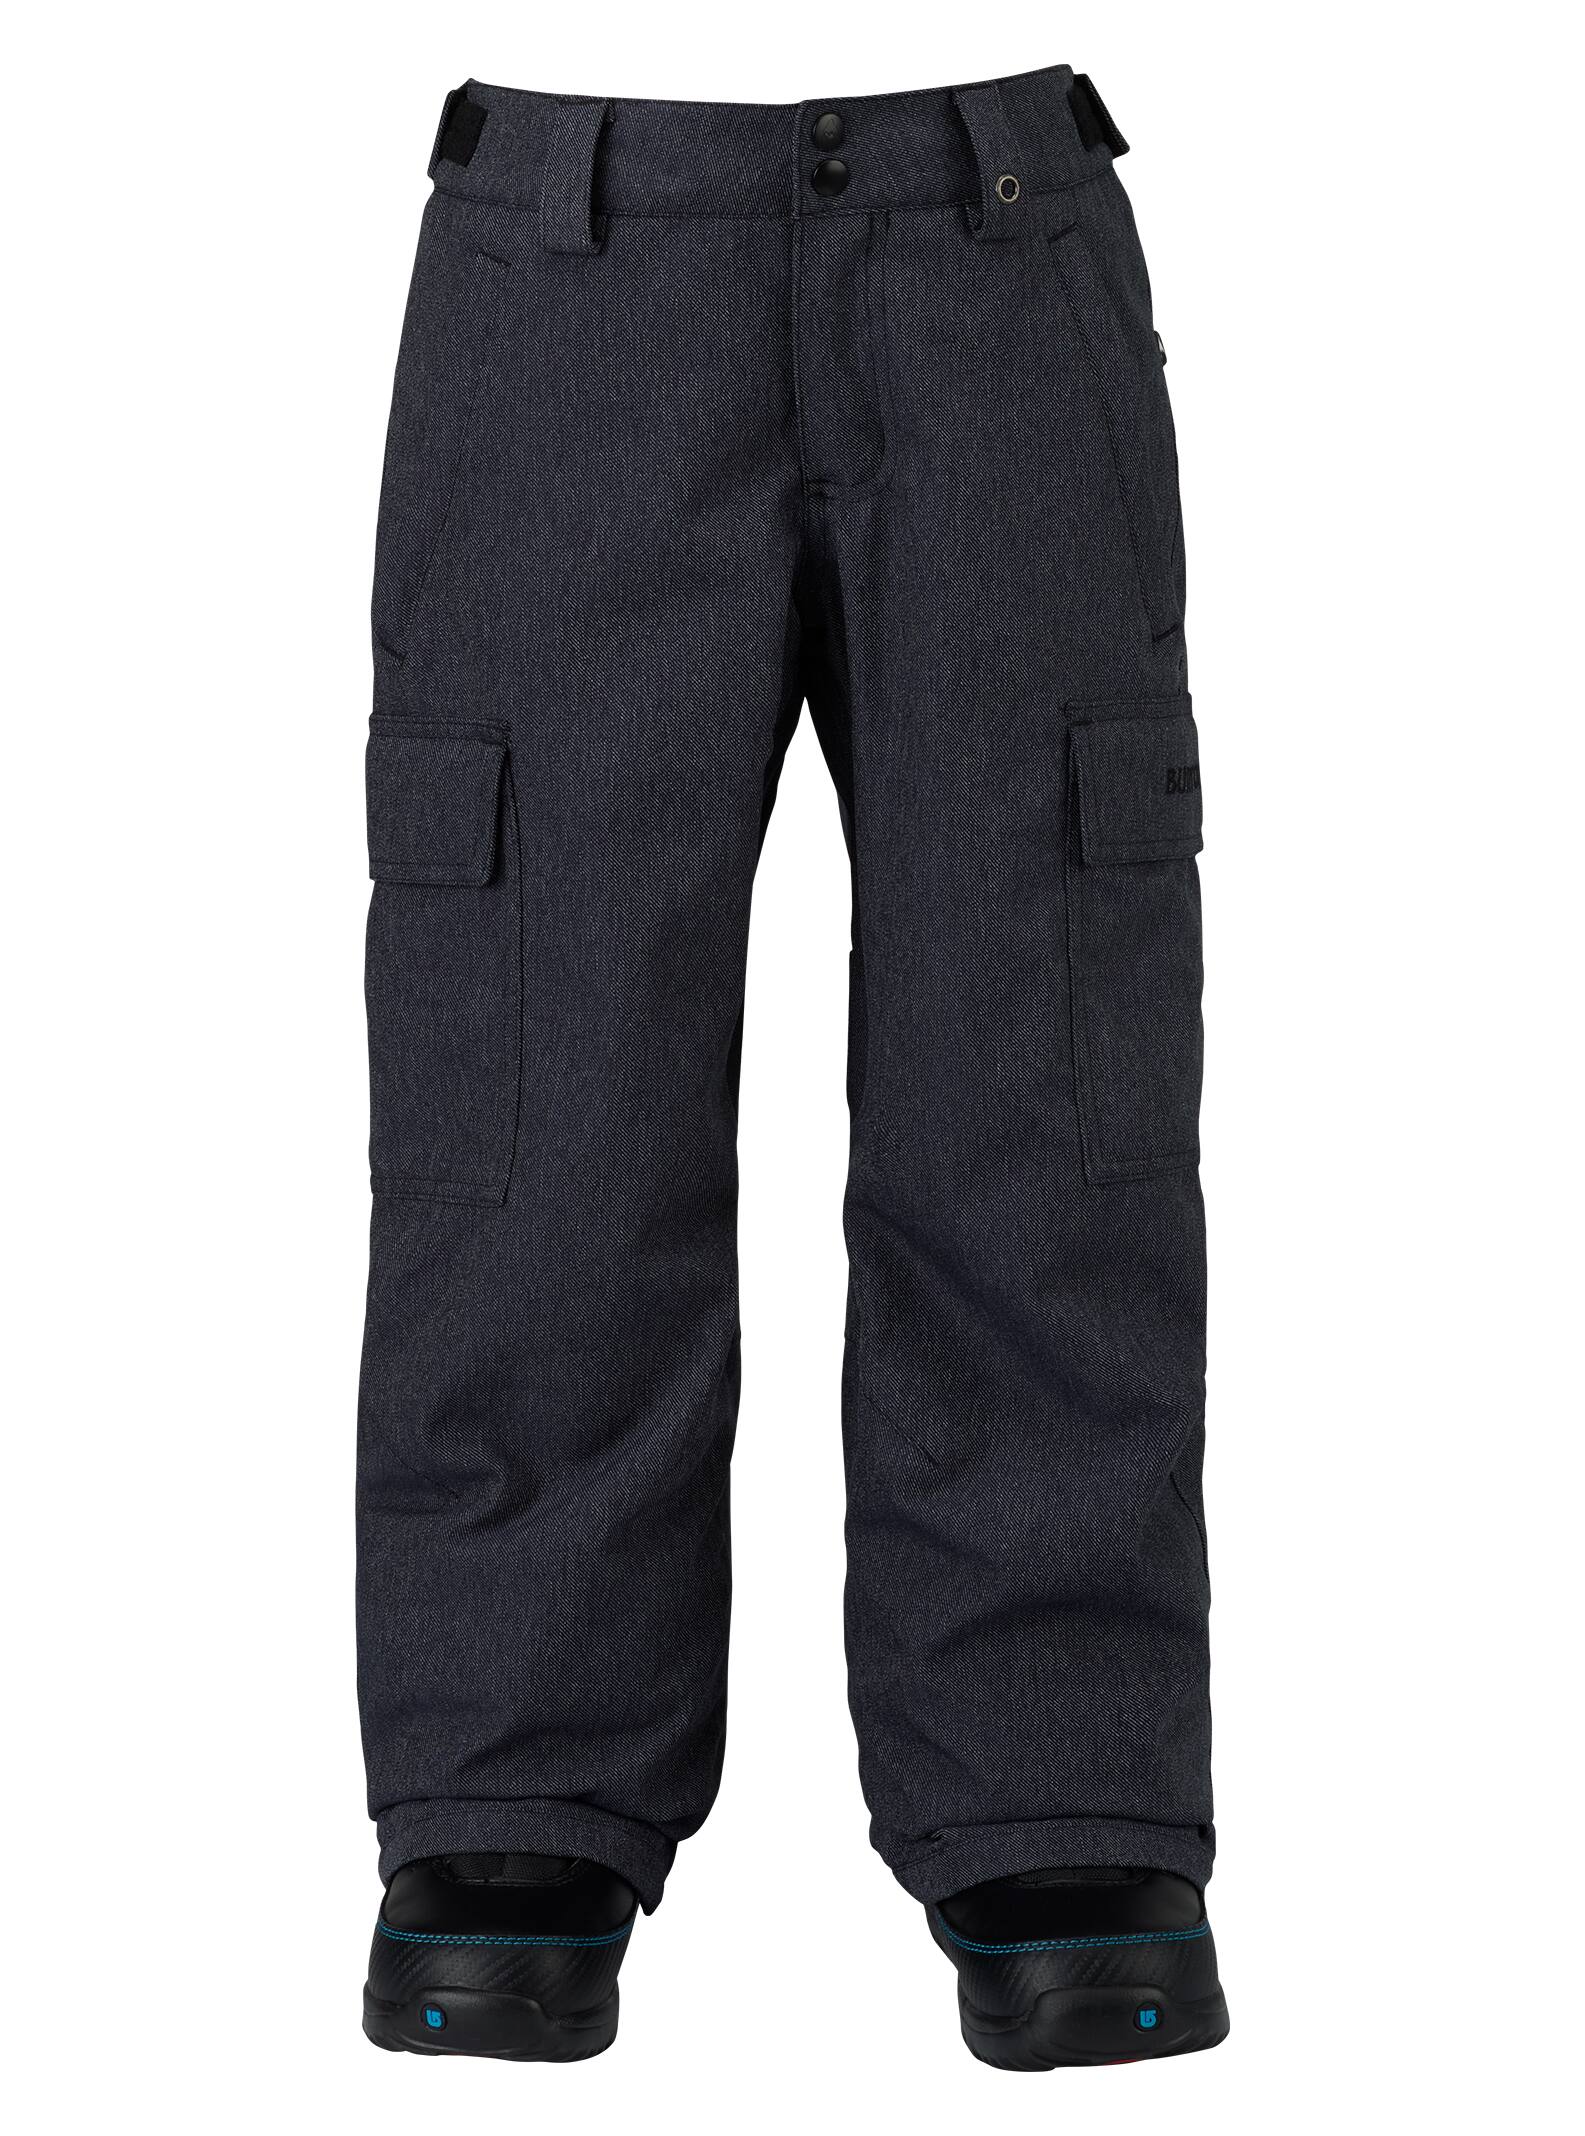 Details about   Burton Boys Exile Cargo Pant Children's Snowboard Ski Functional Trousers 